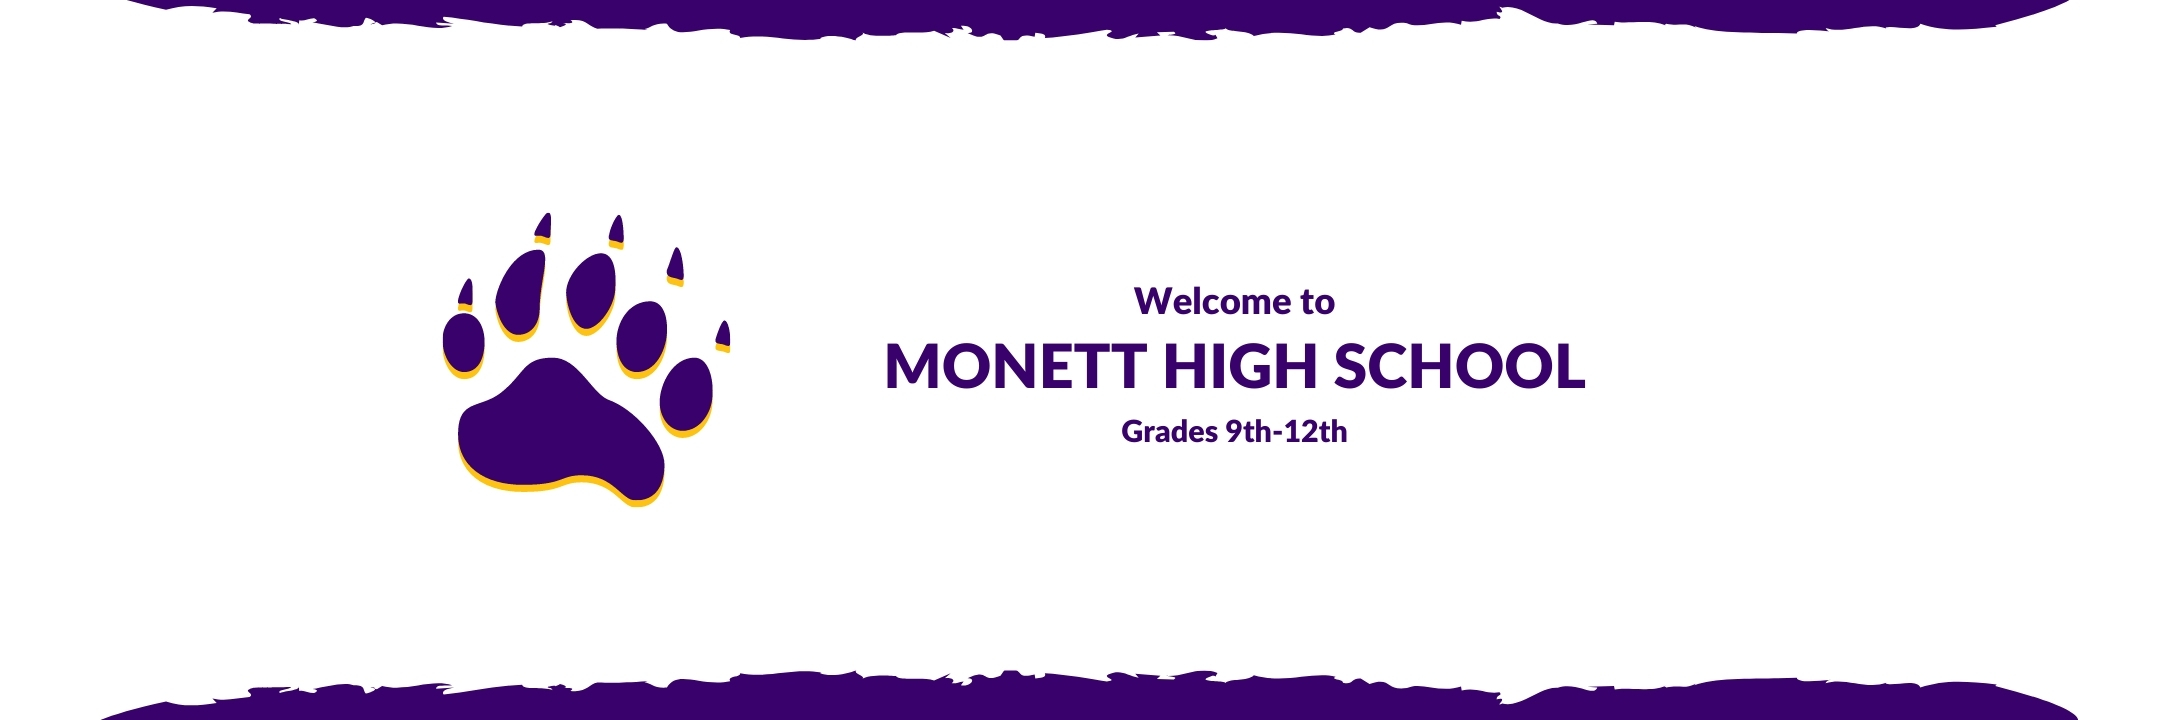 Welcome to Monett High School